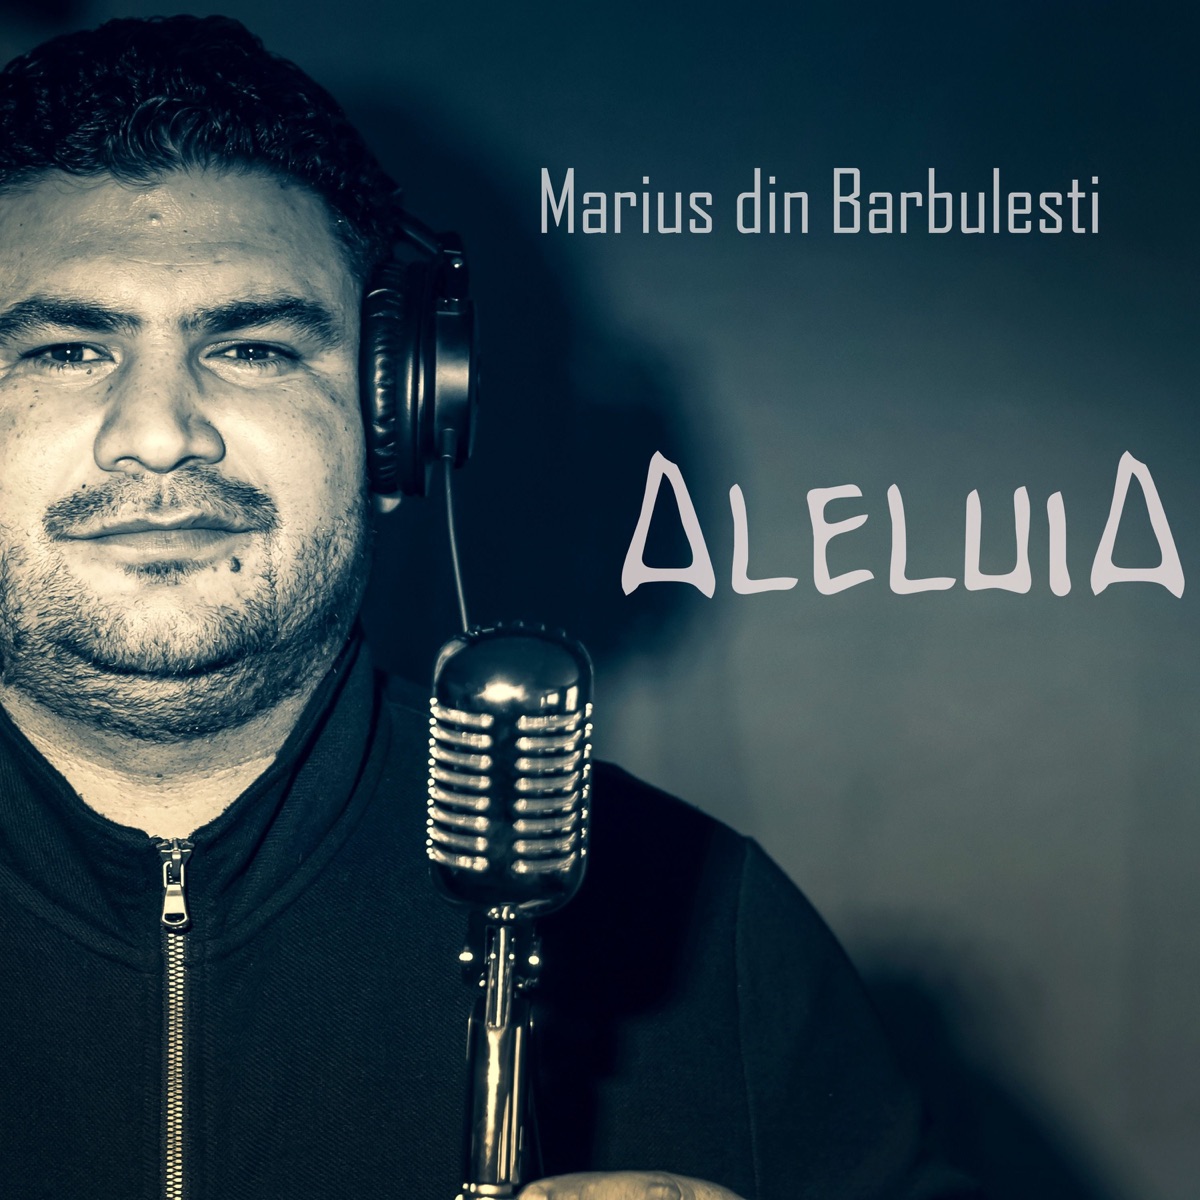 Traia odata intr-o casuta! - EP by Marius din Barbulesti on Apple Music